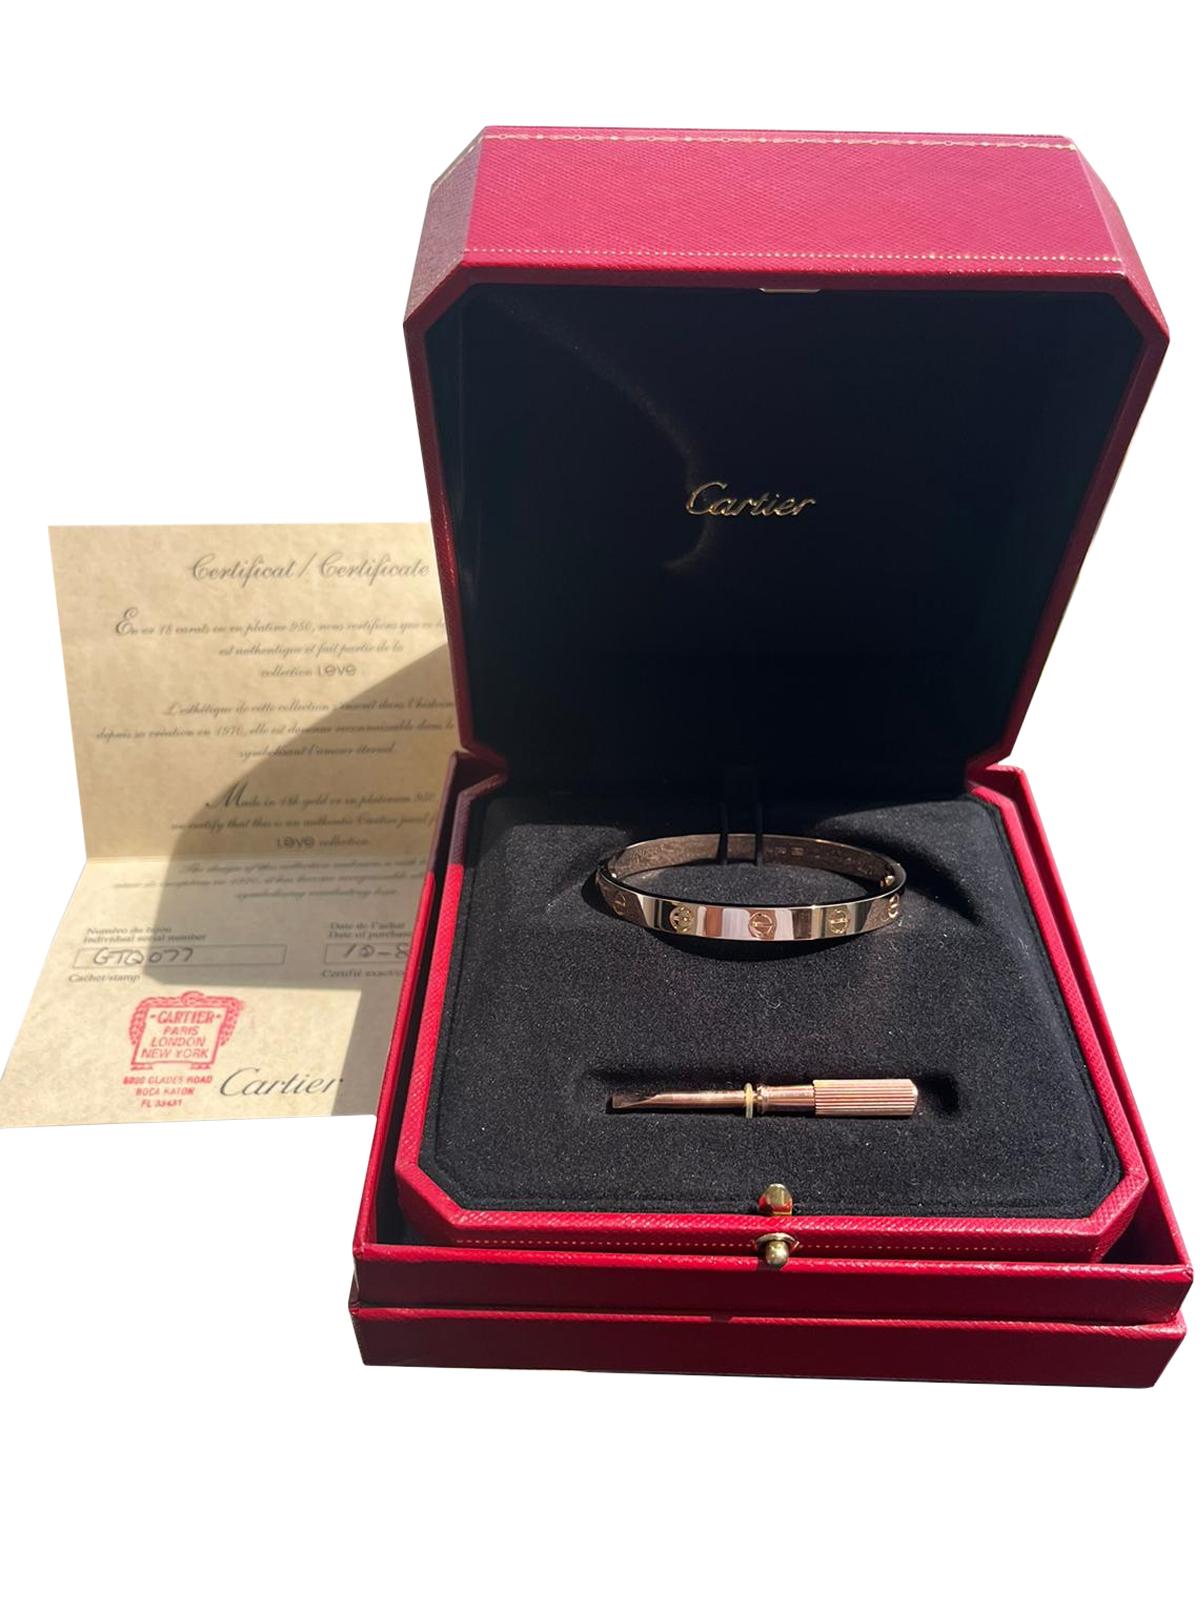 Cartier Love Bracelet 18K Rose Gold Size 16 With Screwdriver For Sale 1